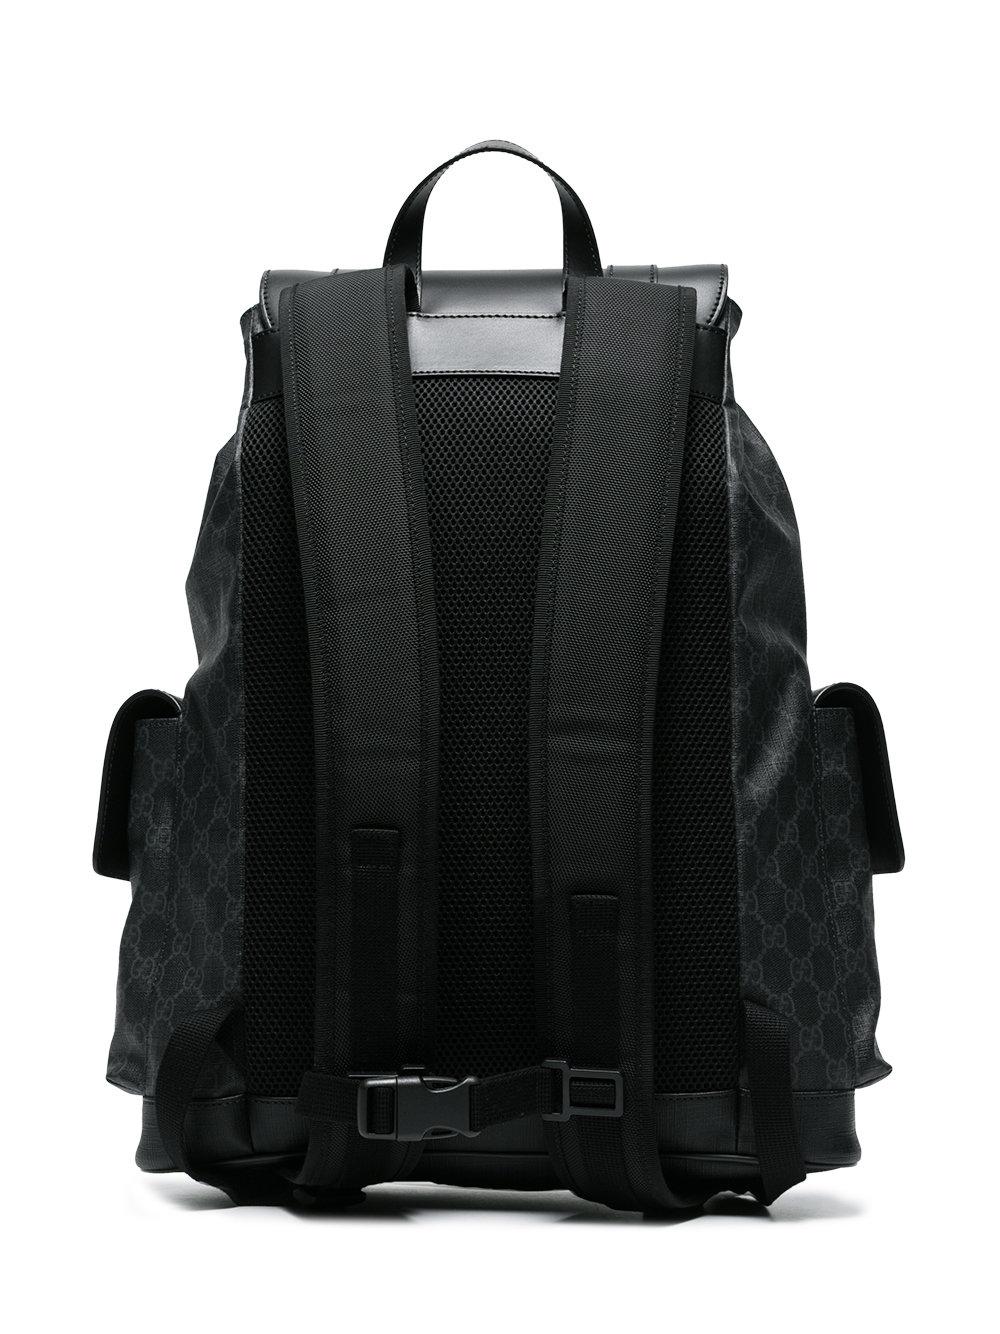 Lyst - Gucci Soft Gg Supreme Backpack in Black for Men